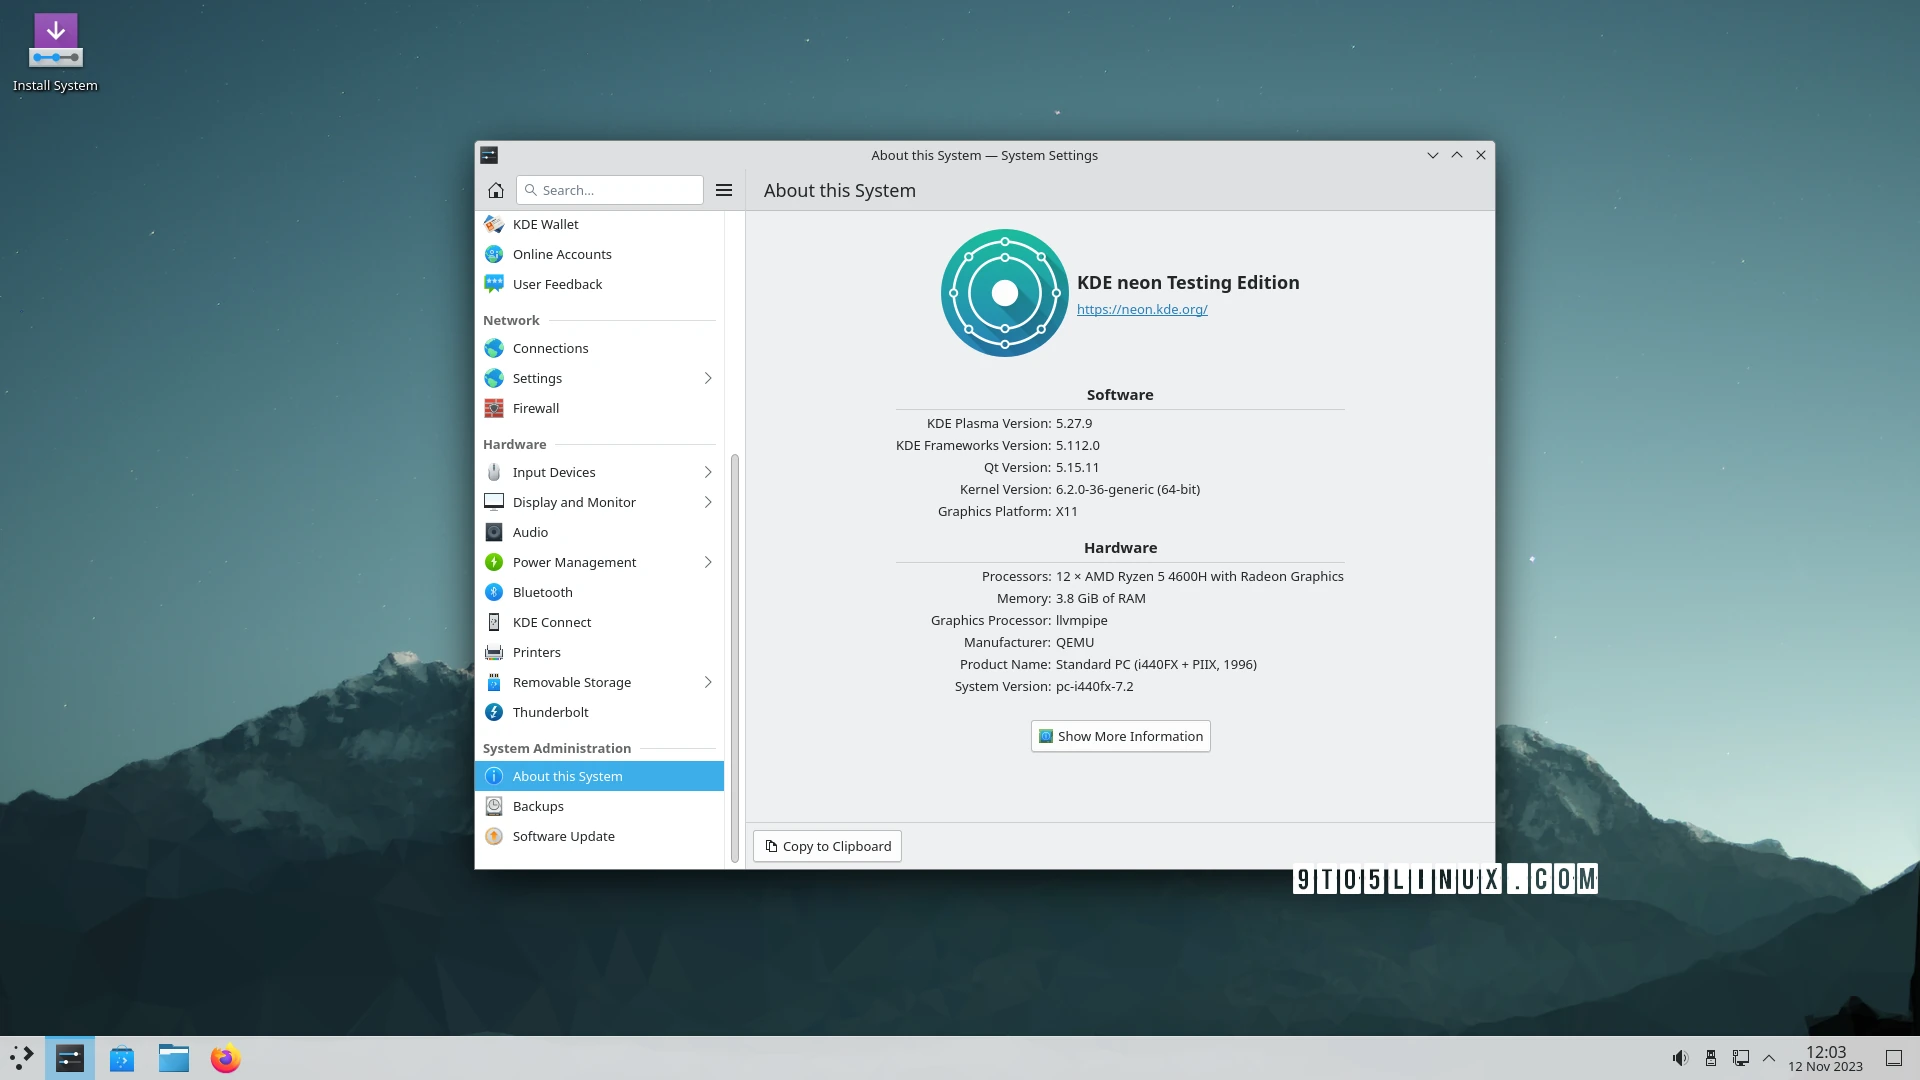 KDE Frameworks 5.112 Improves Support for NetworkManager 1.44, Fixes Bugs